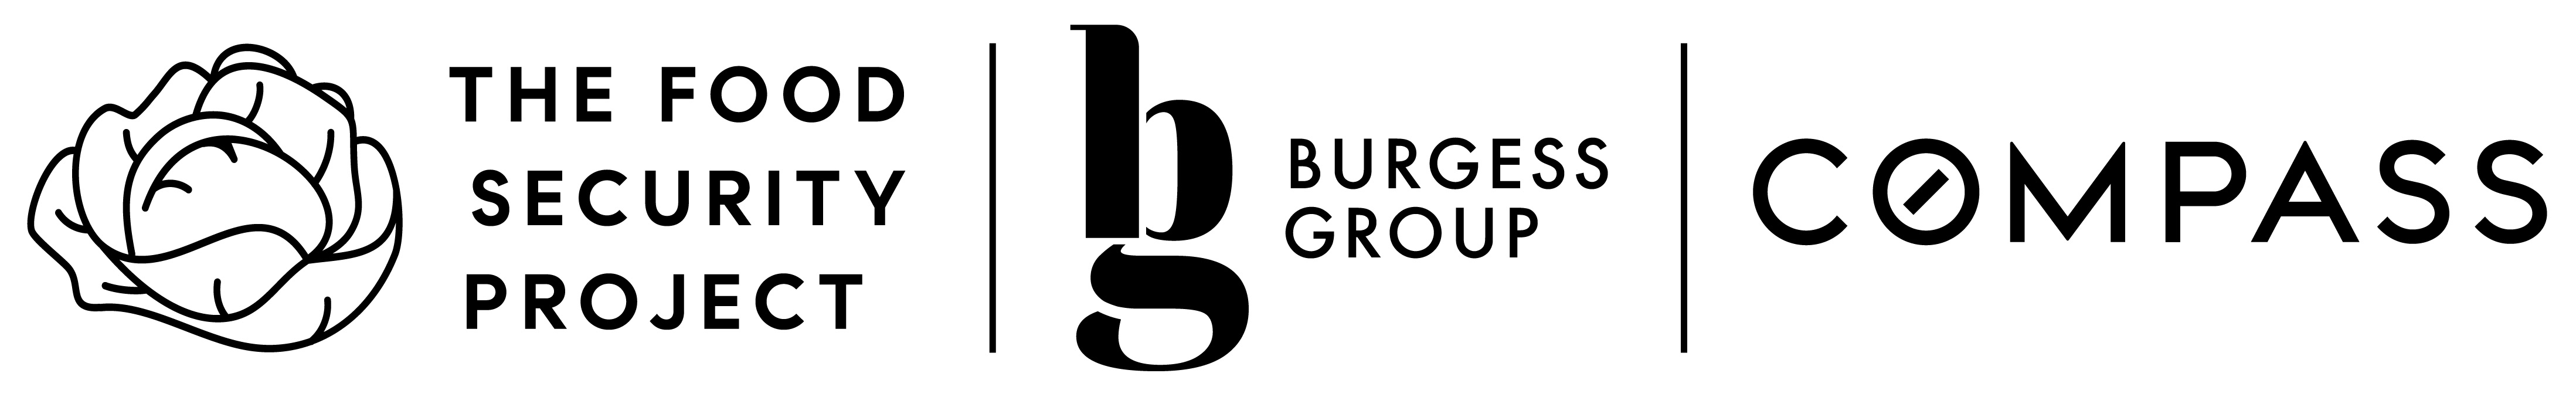 Burgess Group Realty food program